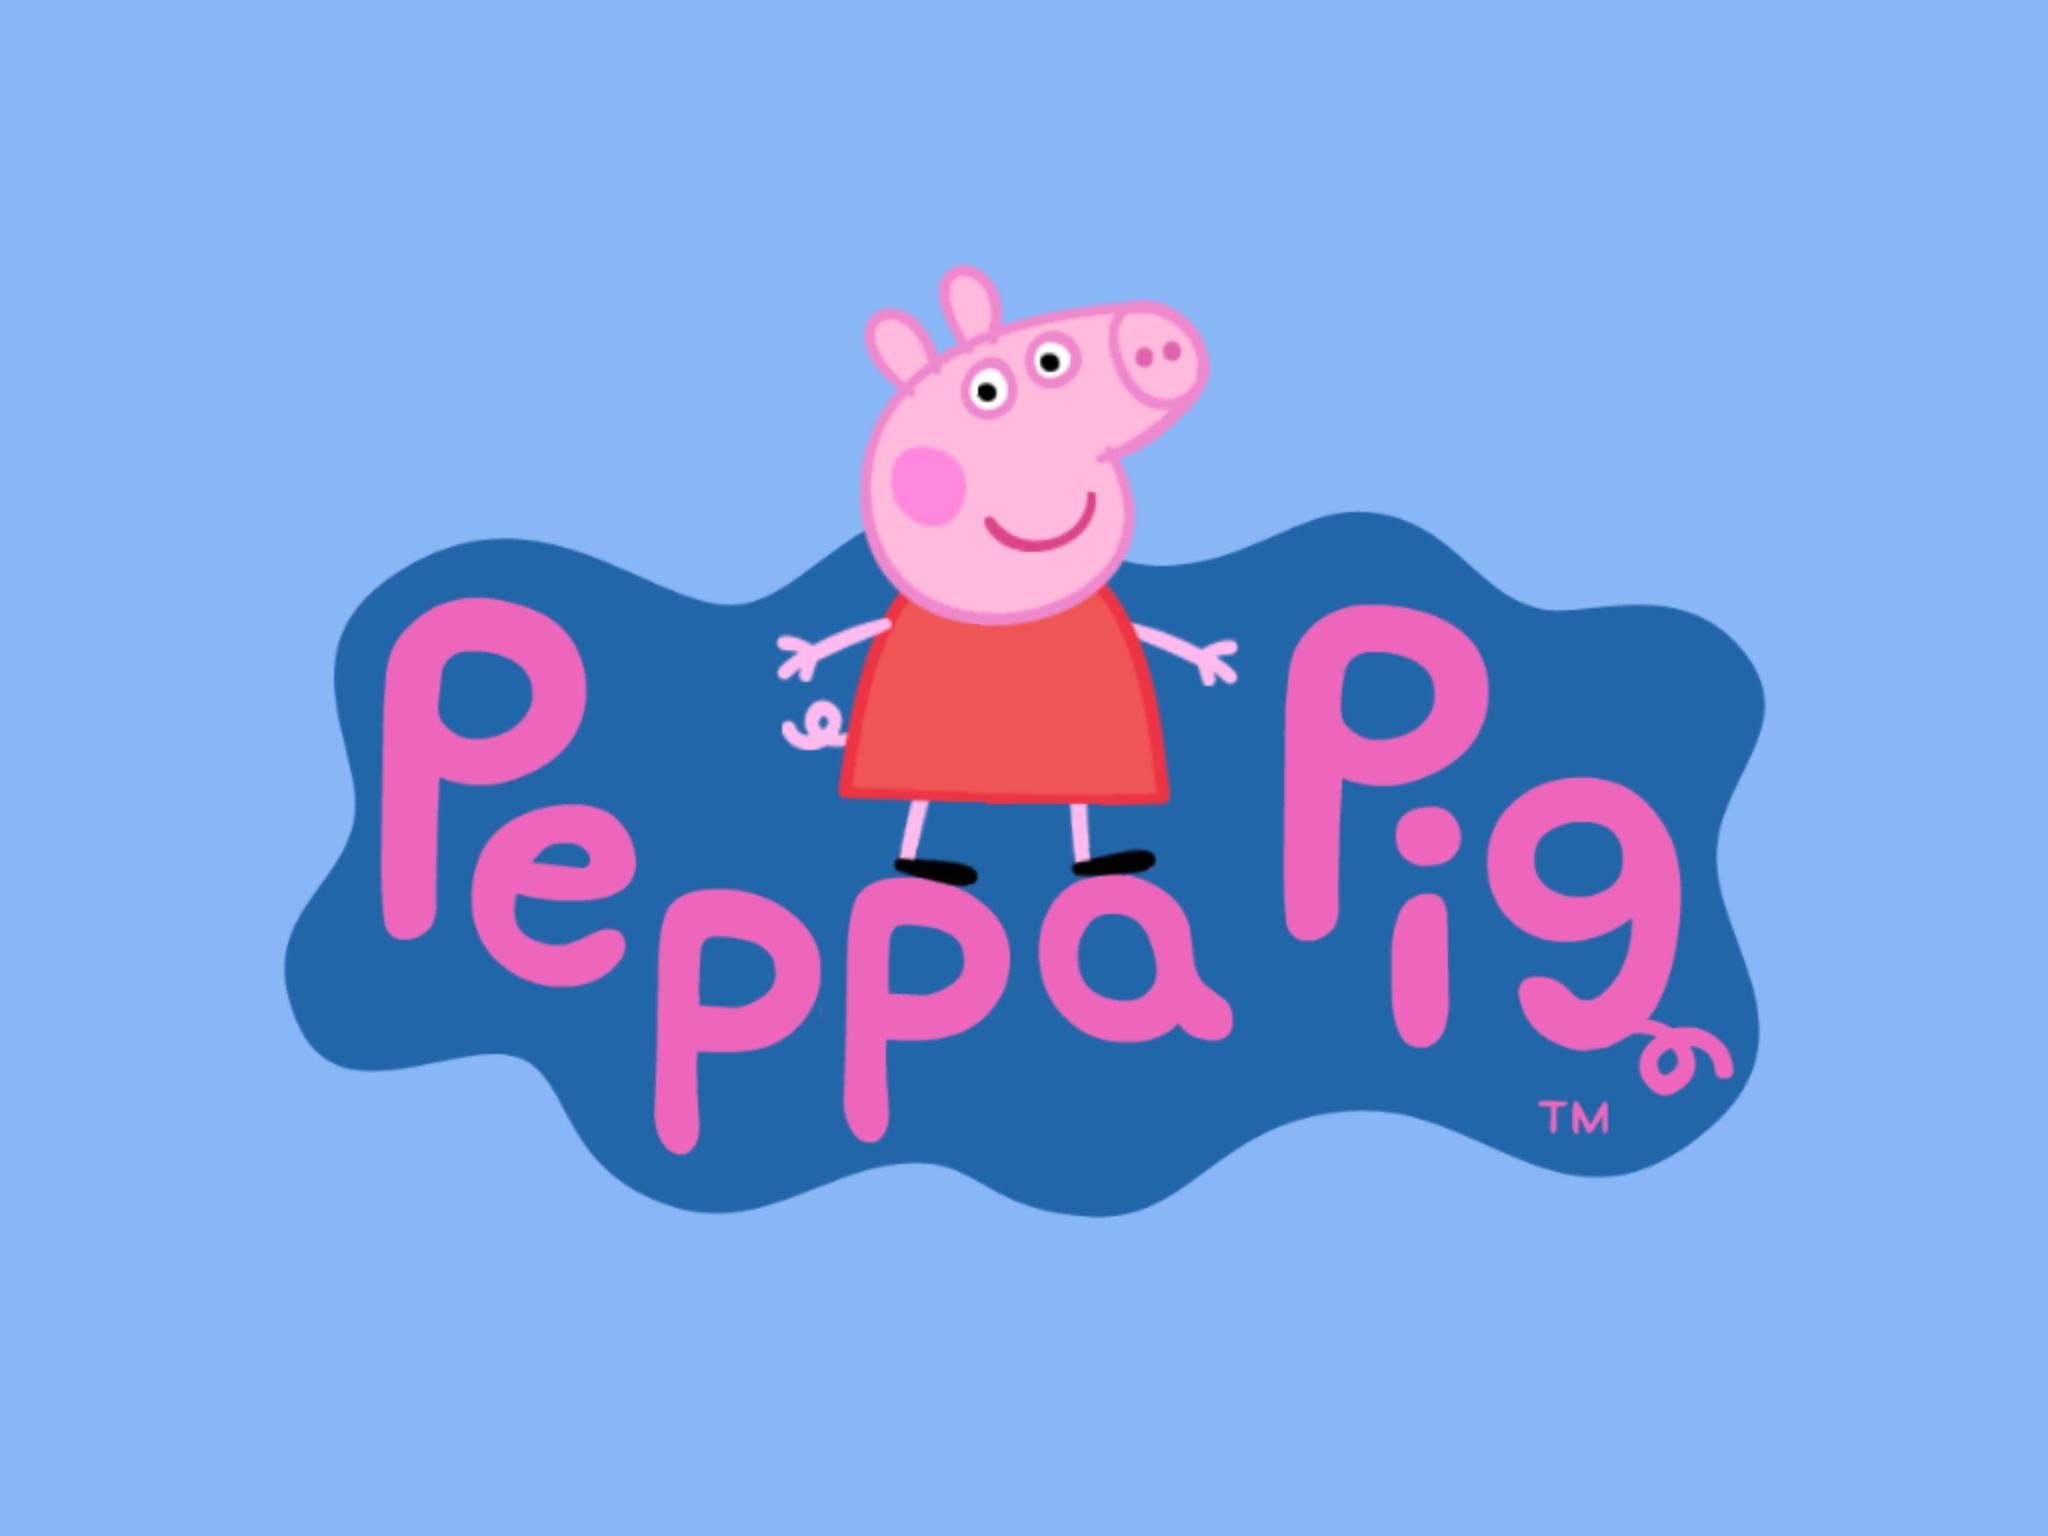 HD peppa pig house wallpapers